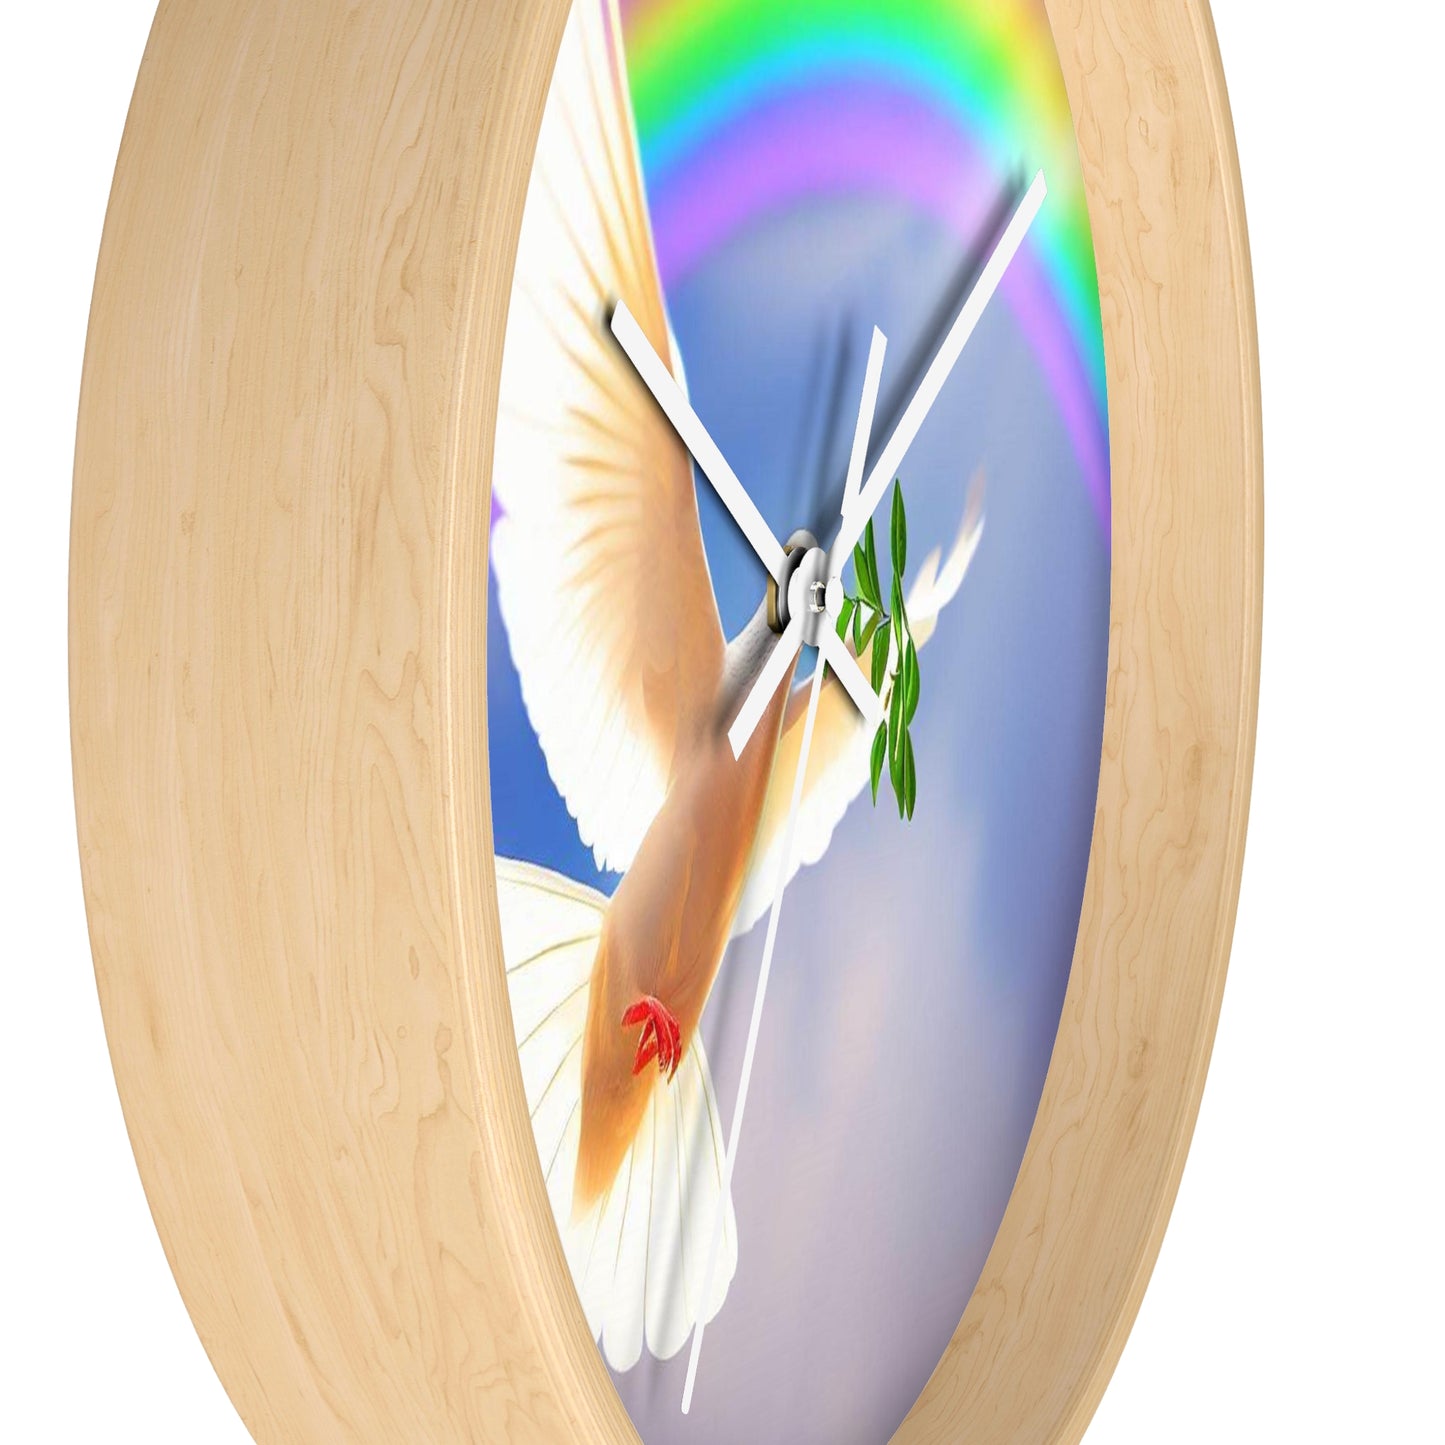 Christian Wall Clock / Jesus clock / Rainbow Clock / Christian Gift Artwork